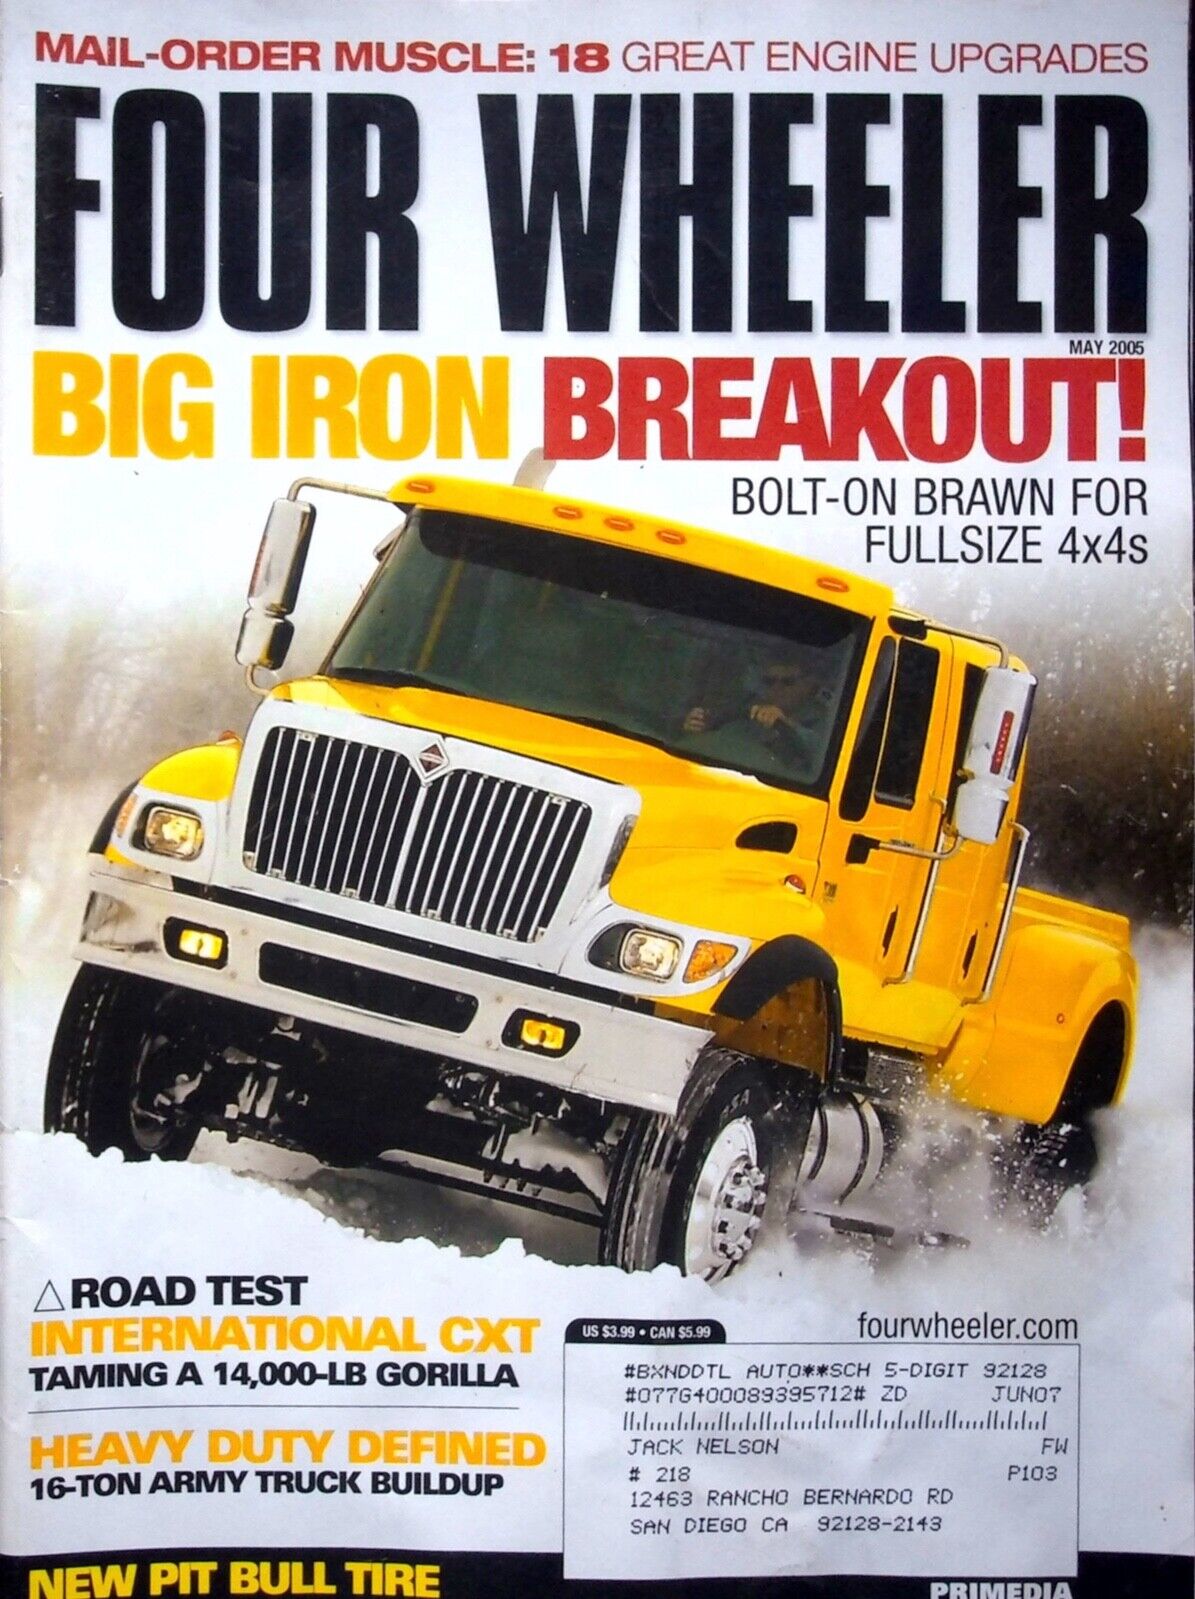 BIG IRON BREAKOUT - FOUR WHEELER,  MAY 2005 VOL. 42, NO. 5